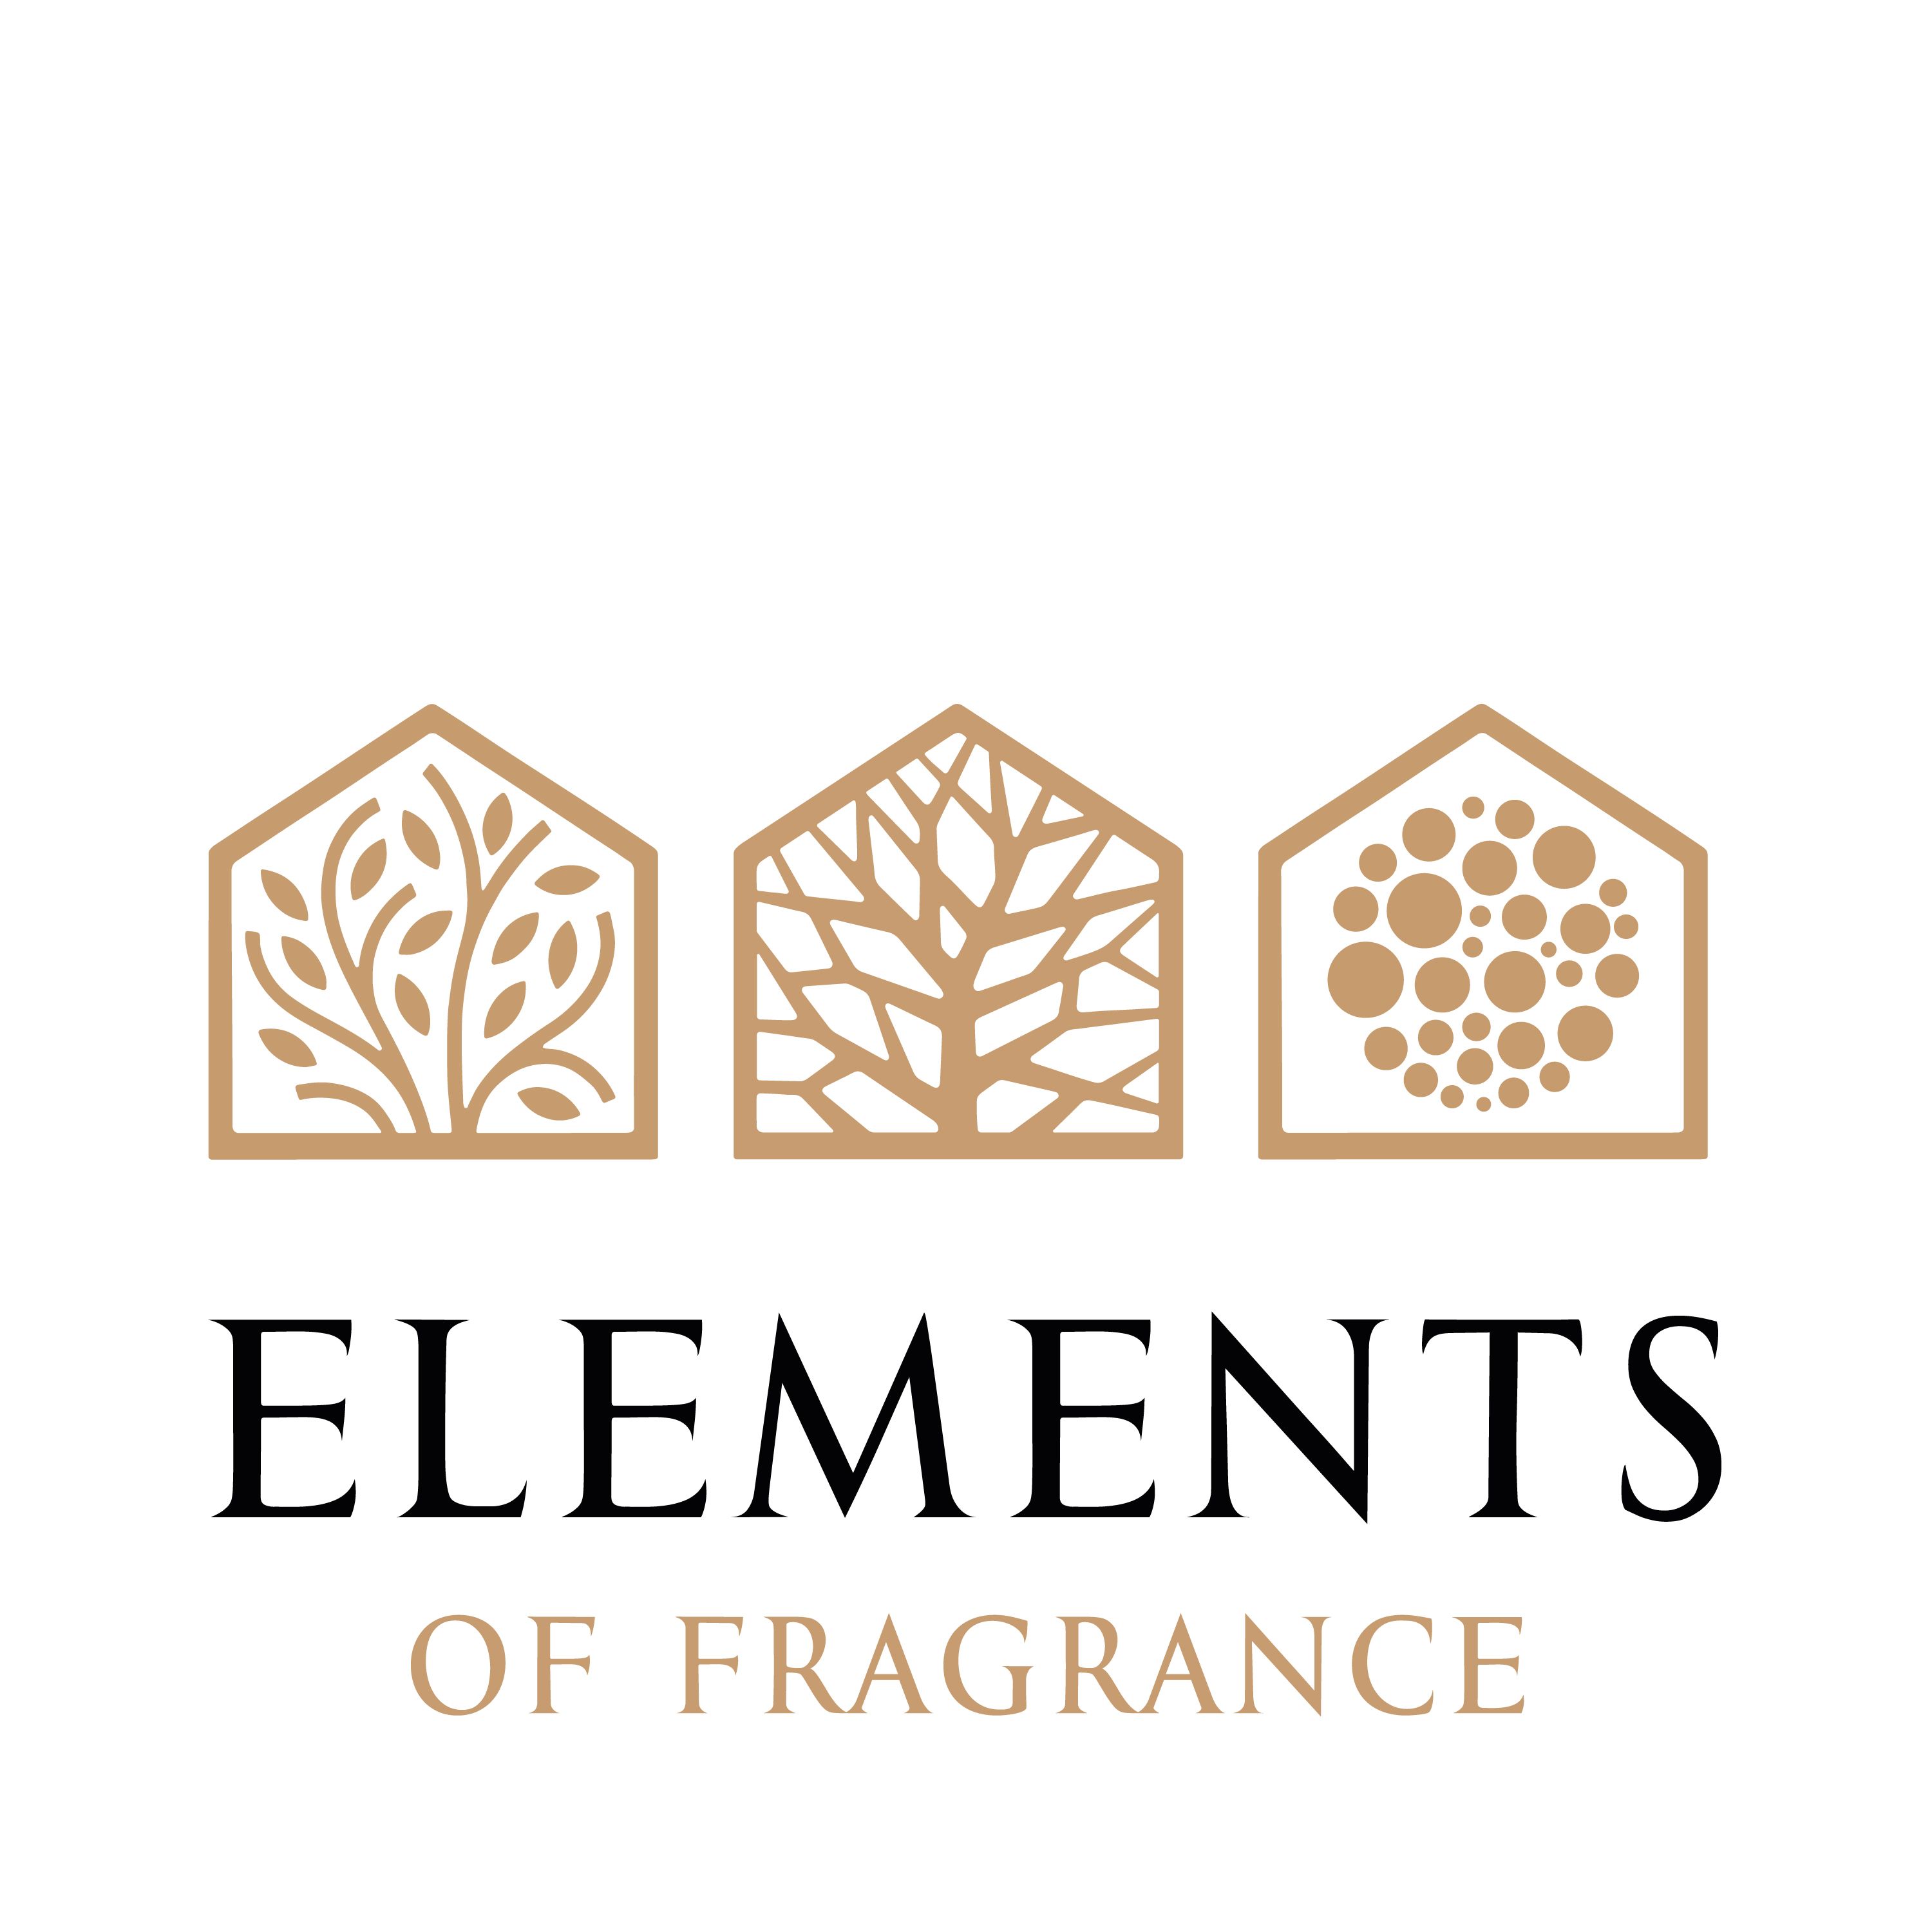 Elements of Fragrance